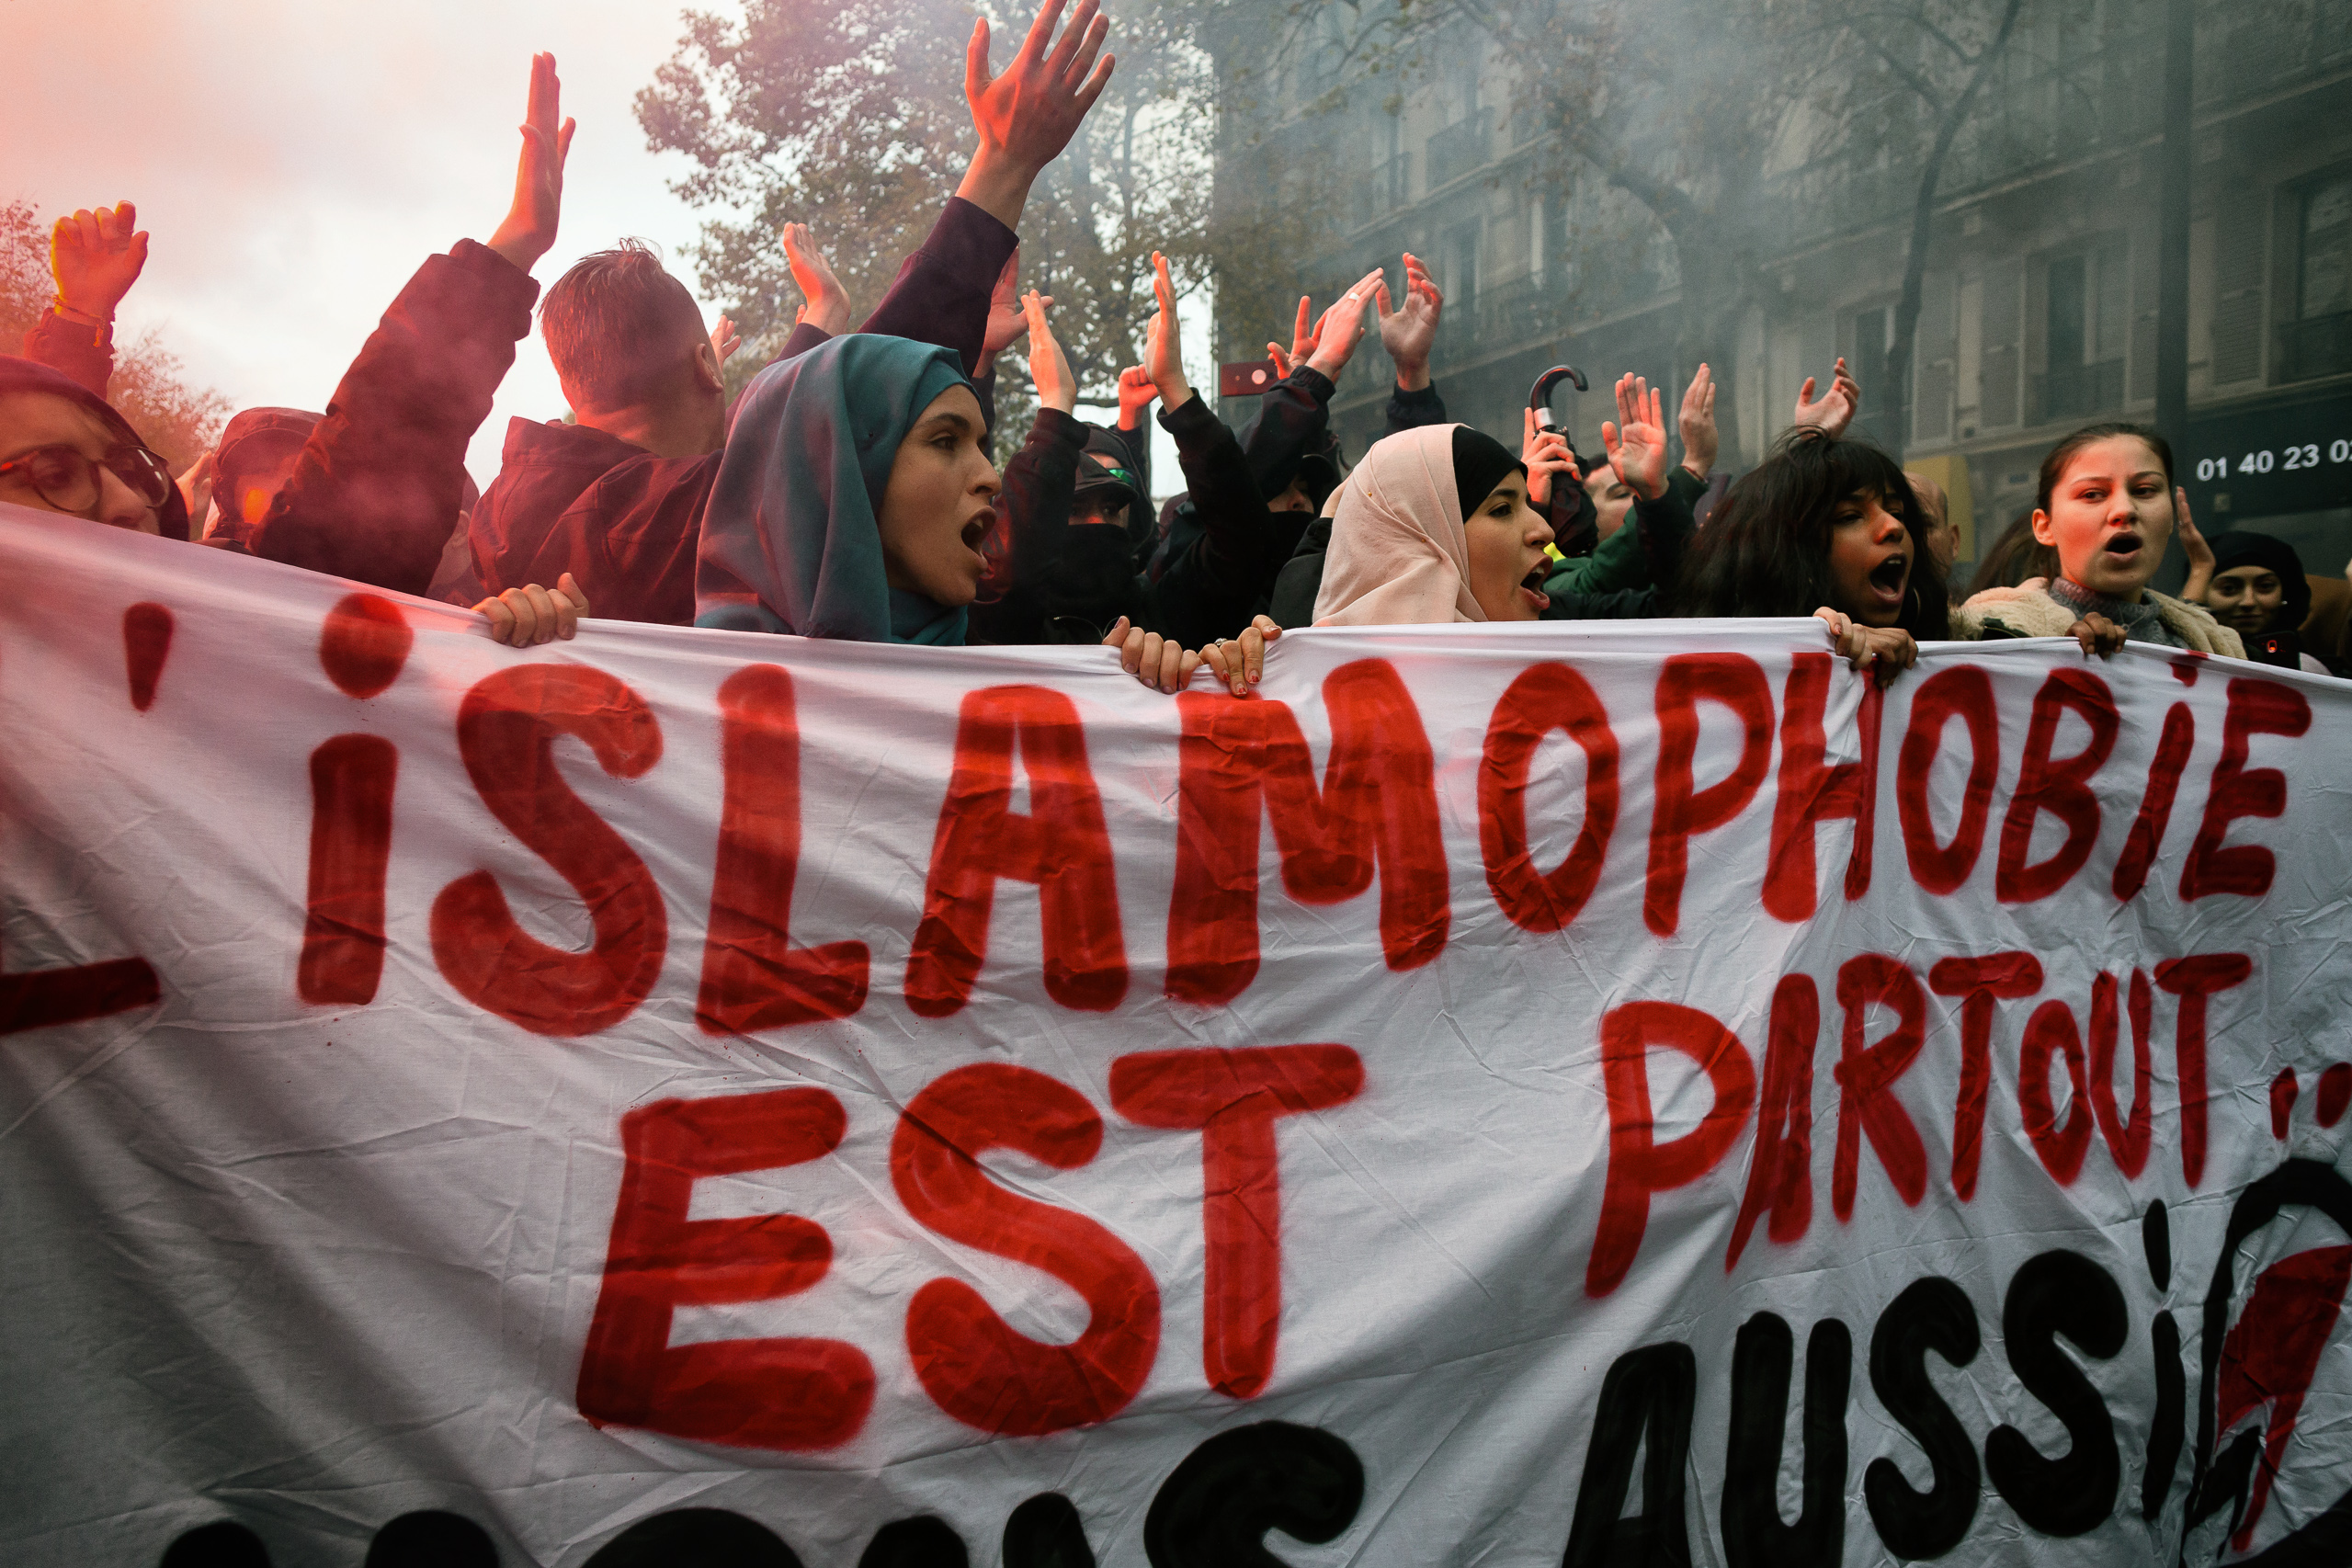 Притесненных мусульман. Мусульмане во Франции. Исламофобия во Франции. Французы мусульмане.